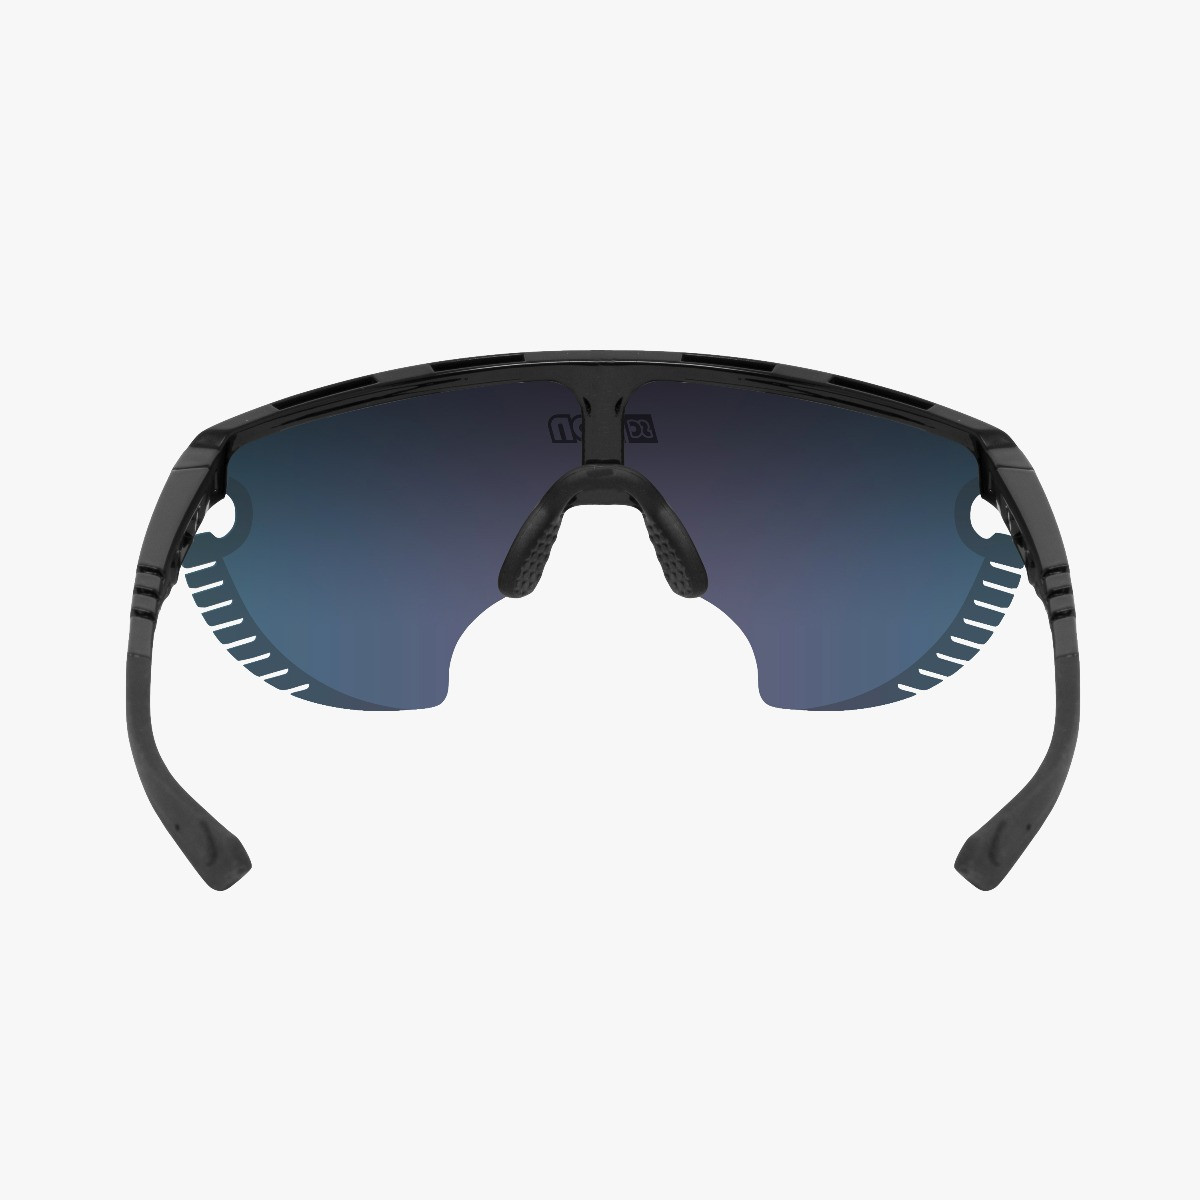 Scicon Sports | Aerowing Lamon Sport Performance Sunglasses - Black Gloss / Multimirror Blue - EY30030200

